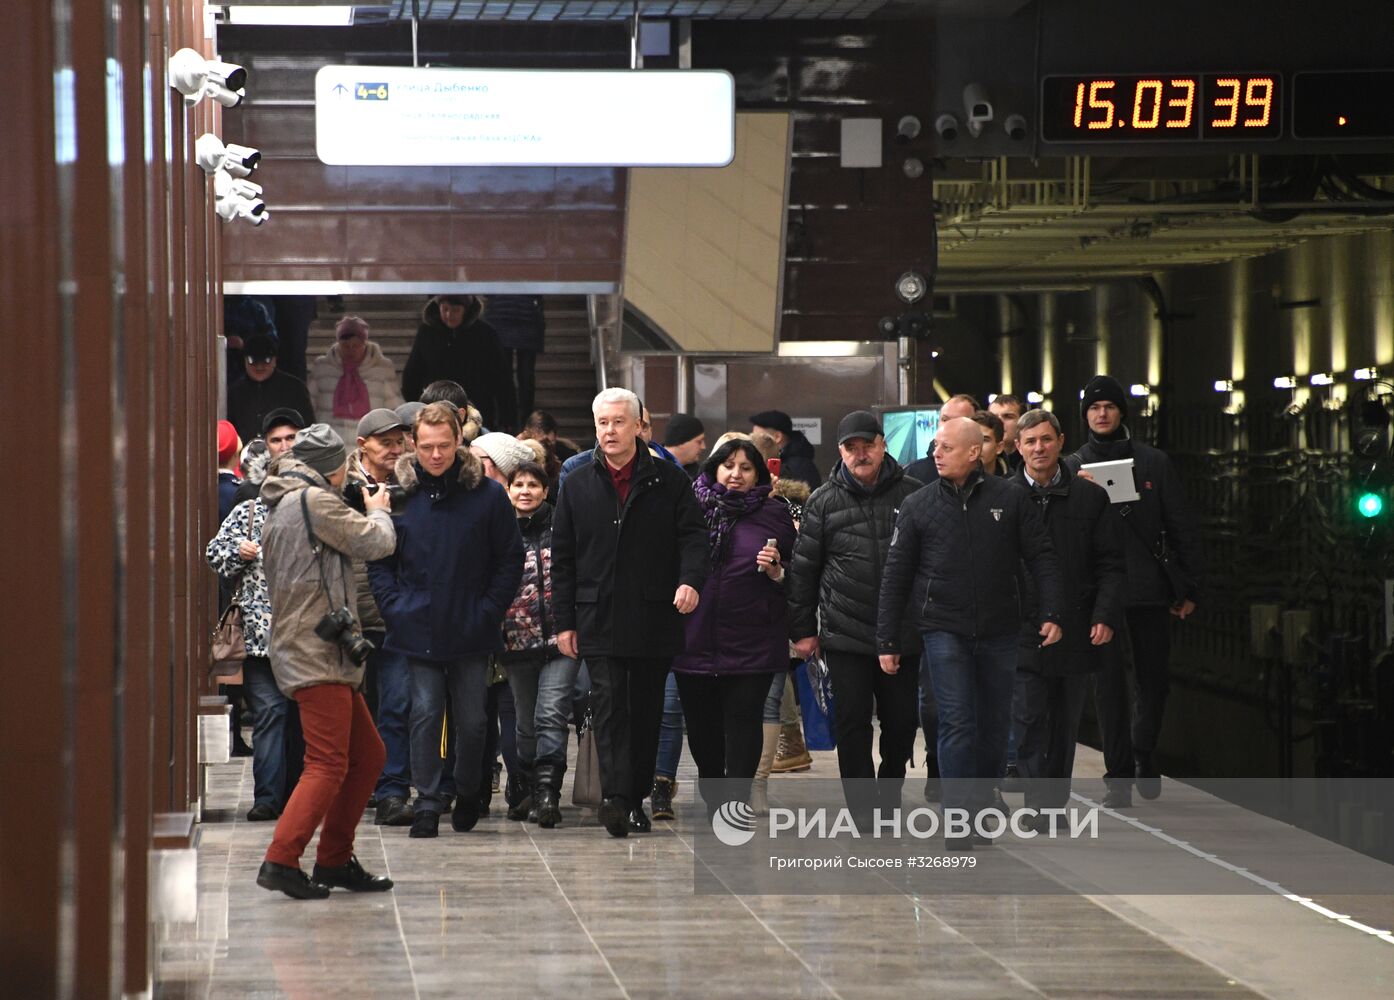 Открытие станции метро "Ховрино"